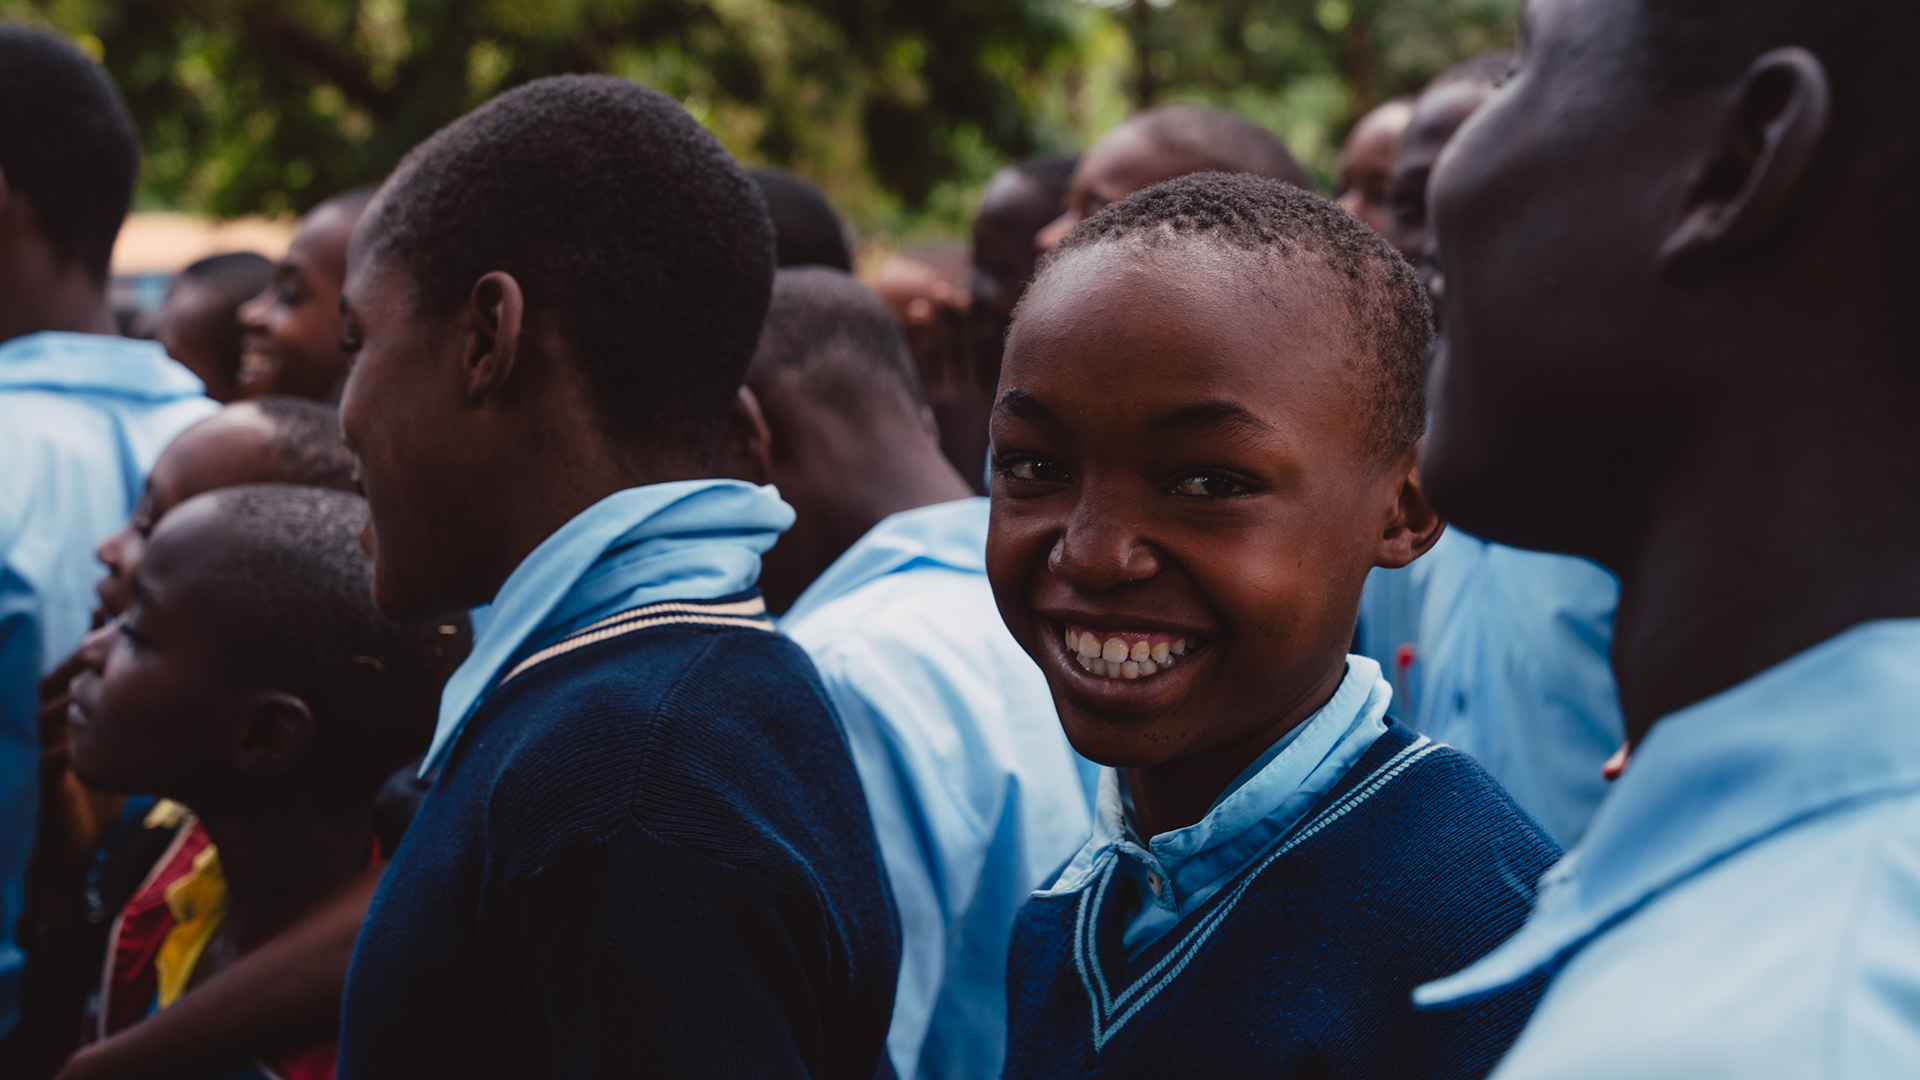 Close up of a smiling Kenyan school boy in blue uniform